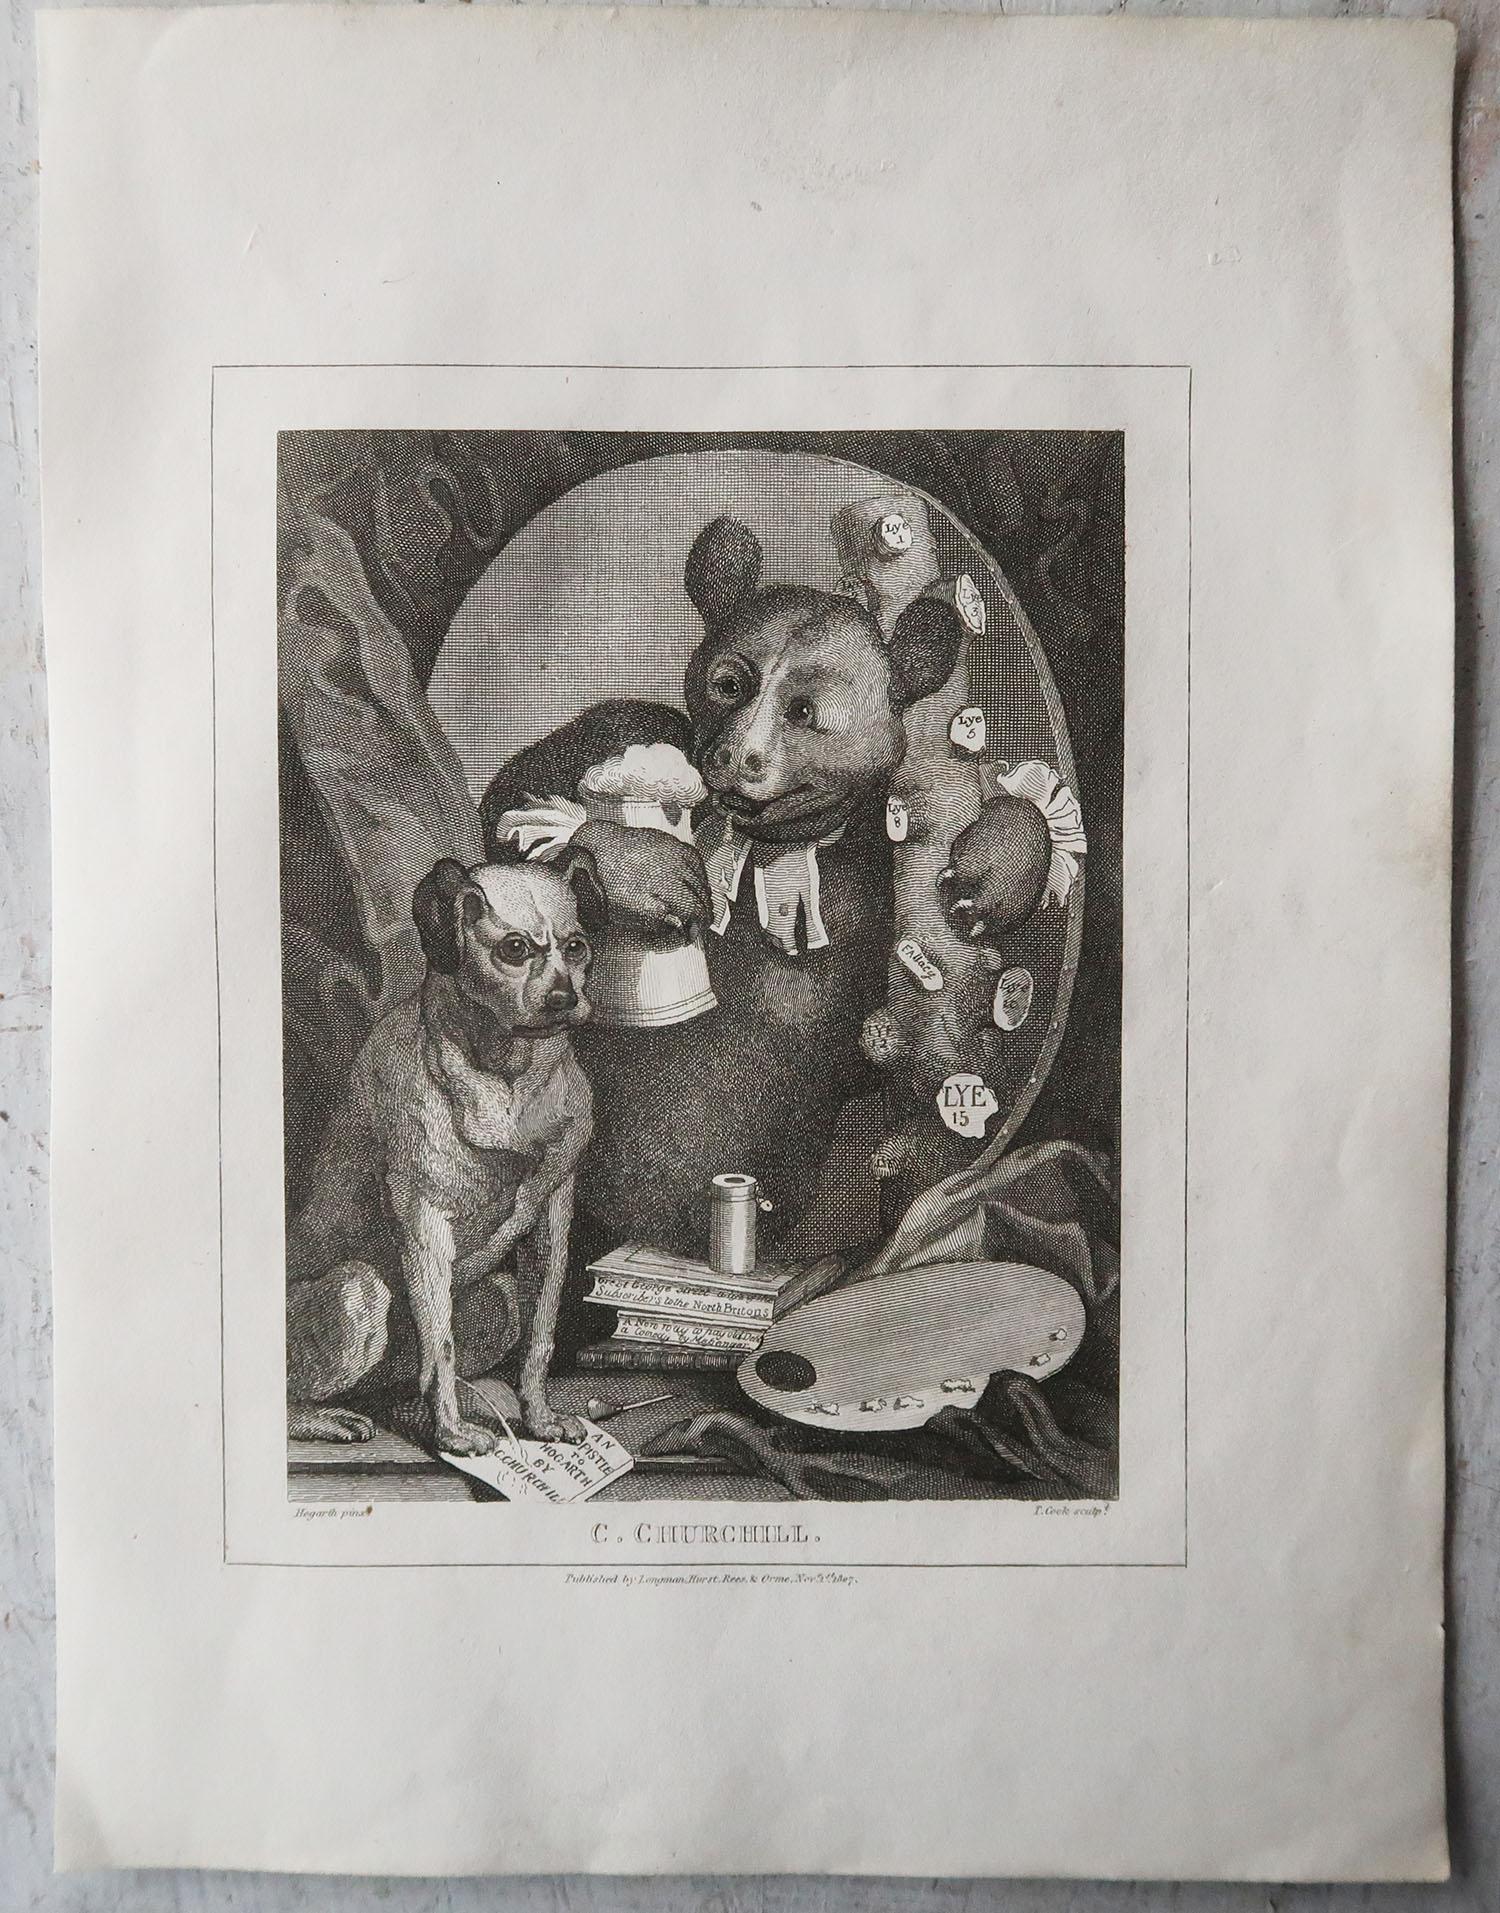 English Original Antique Print After William Hogarth, 